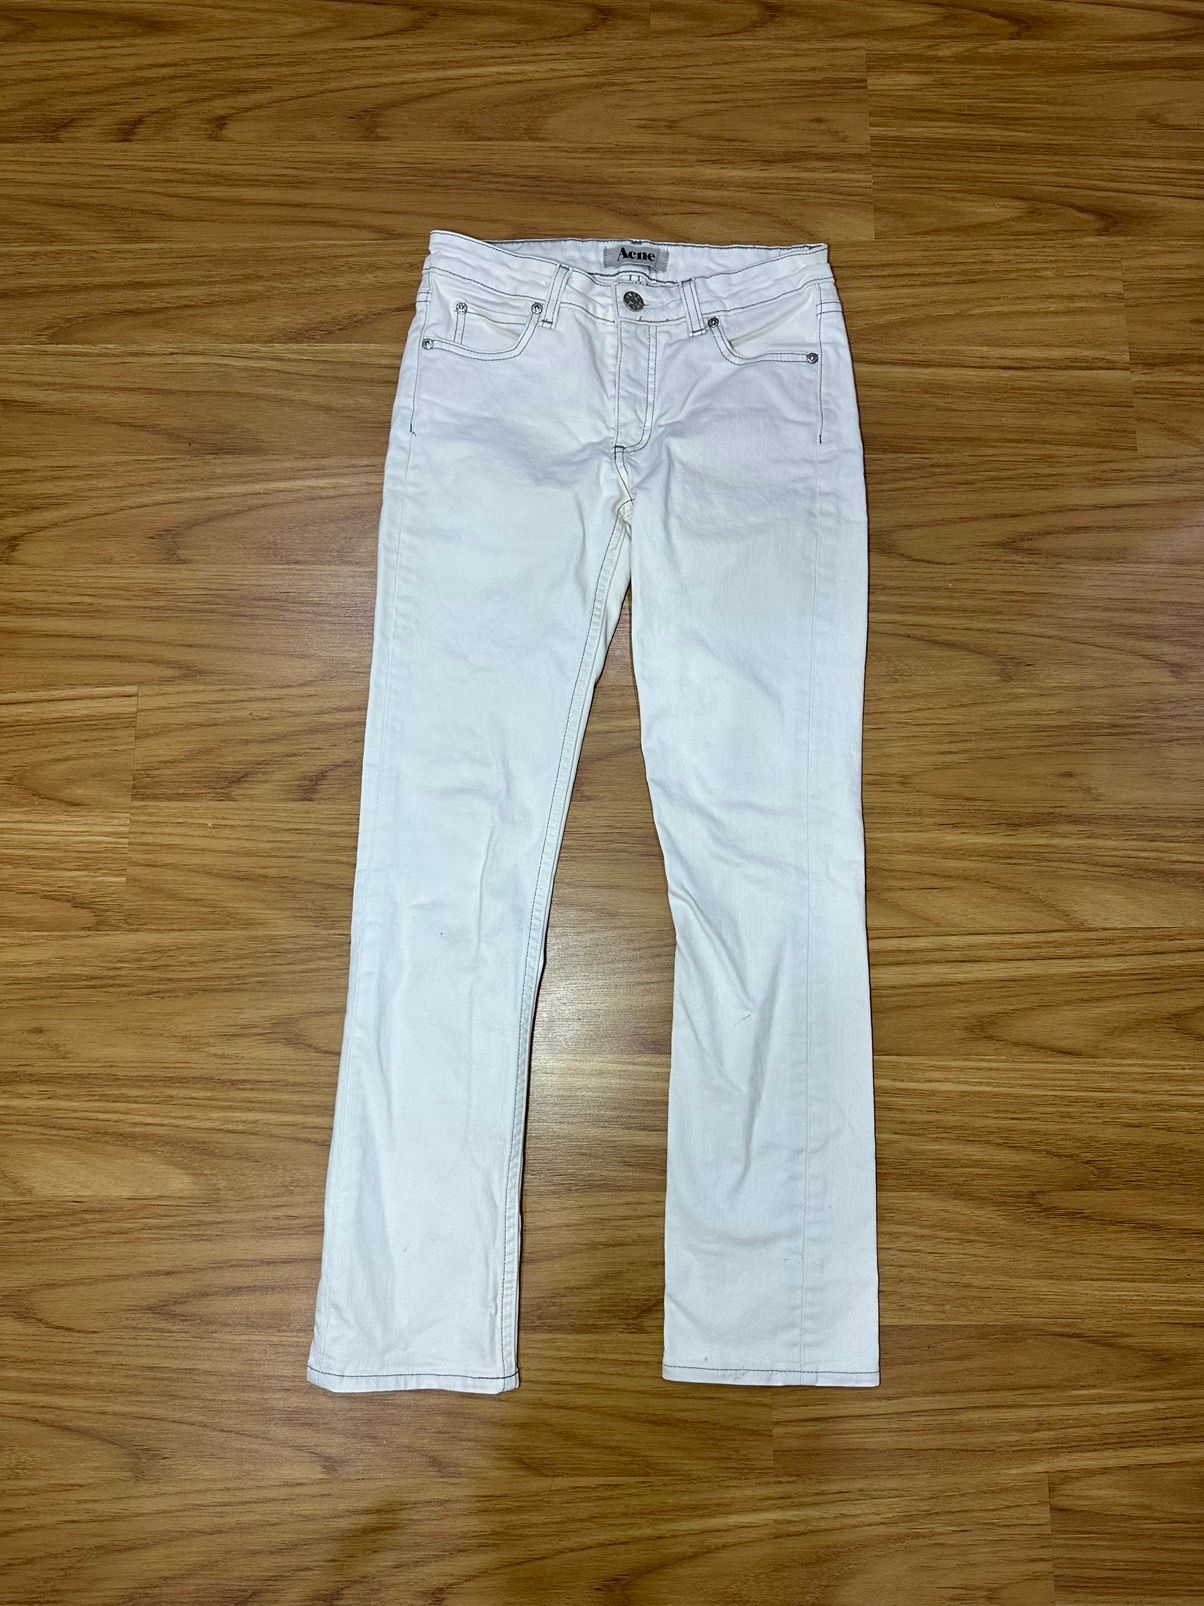 SS15 Acne Studios White Skinny Jeans - 2